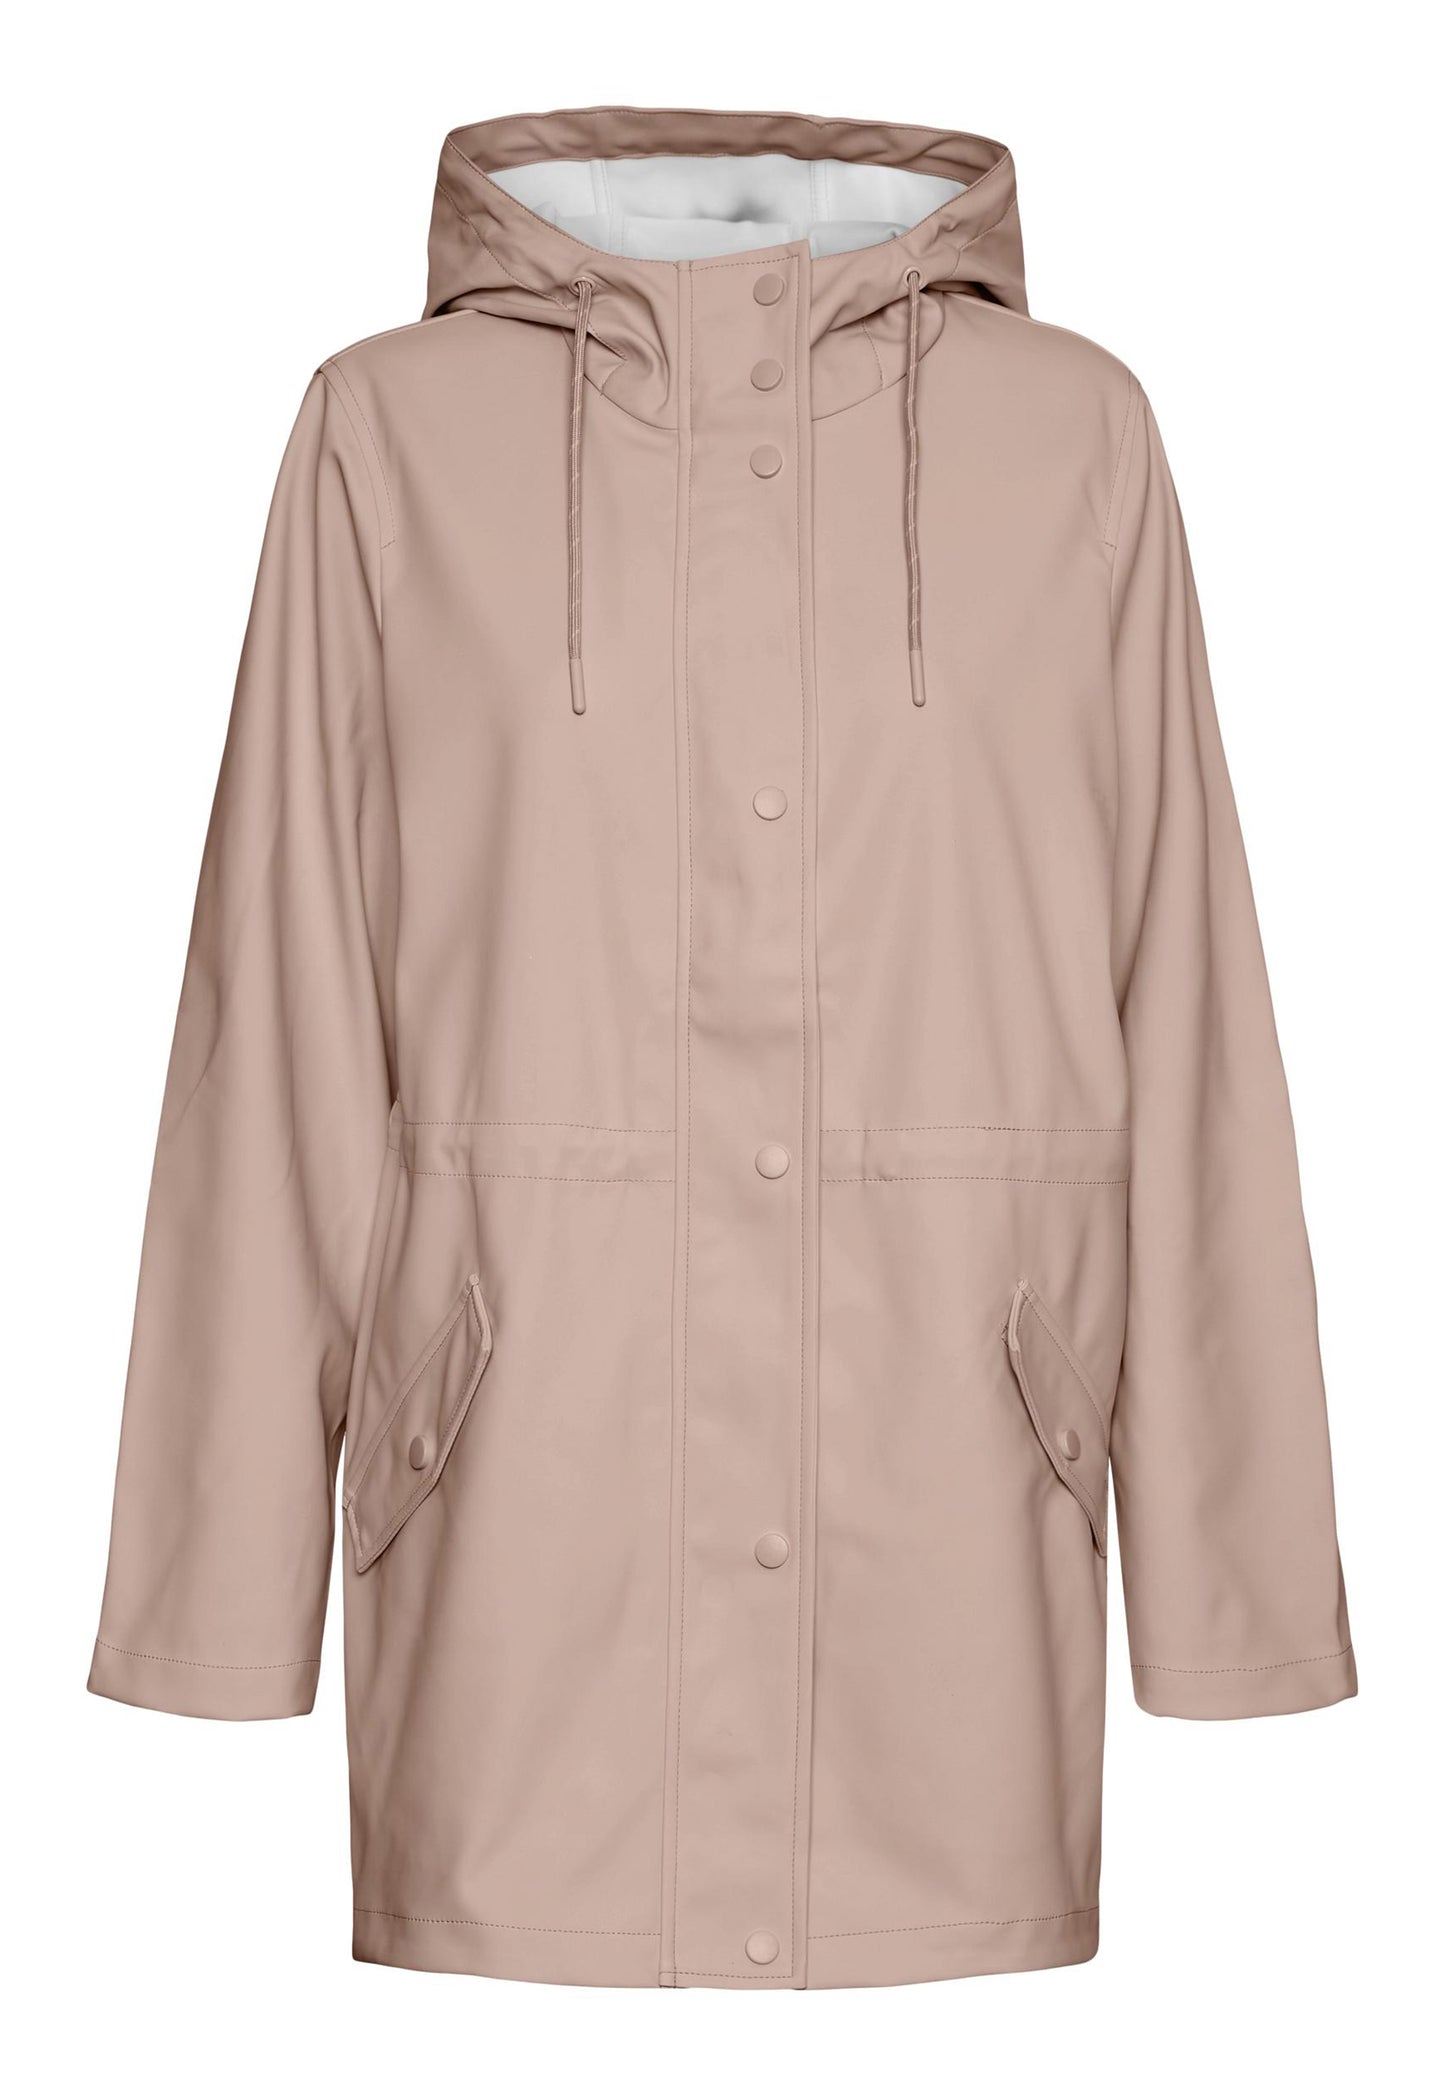 VERO MODA Lou Matte Raincoat Mac in Dusky Pink | One Nation Clothing VERO MODA Pink Matte Hooded Waterproof Raincoat Anorak Mac Jacket